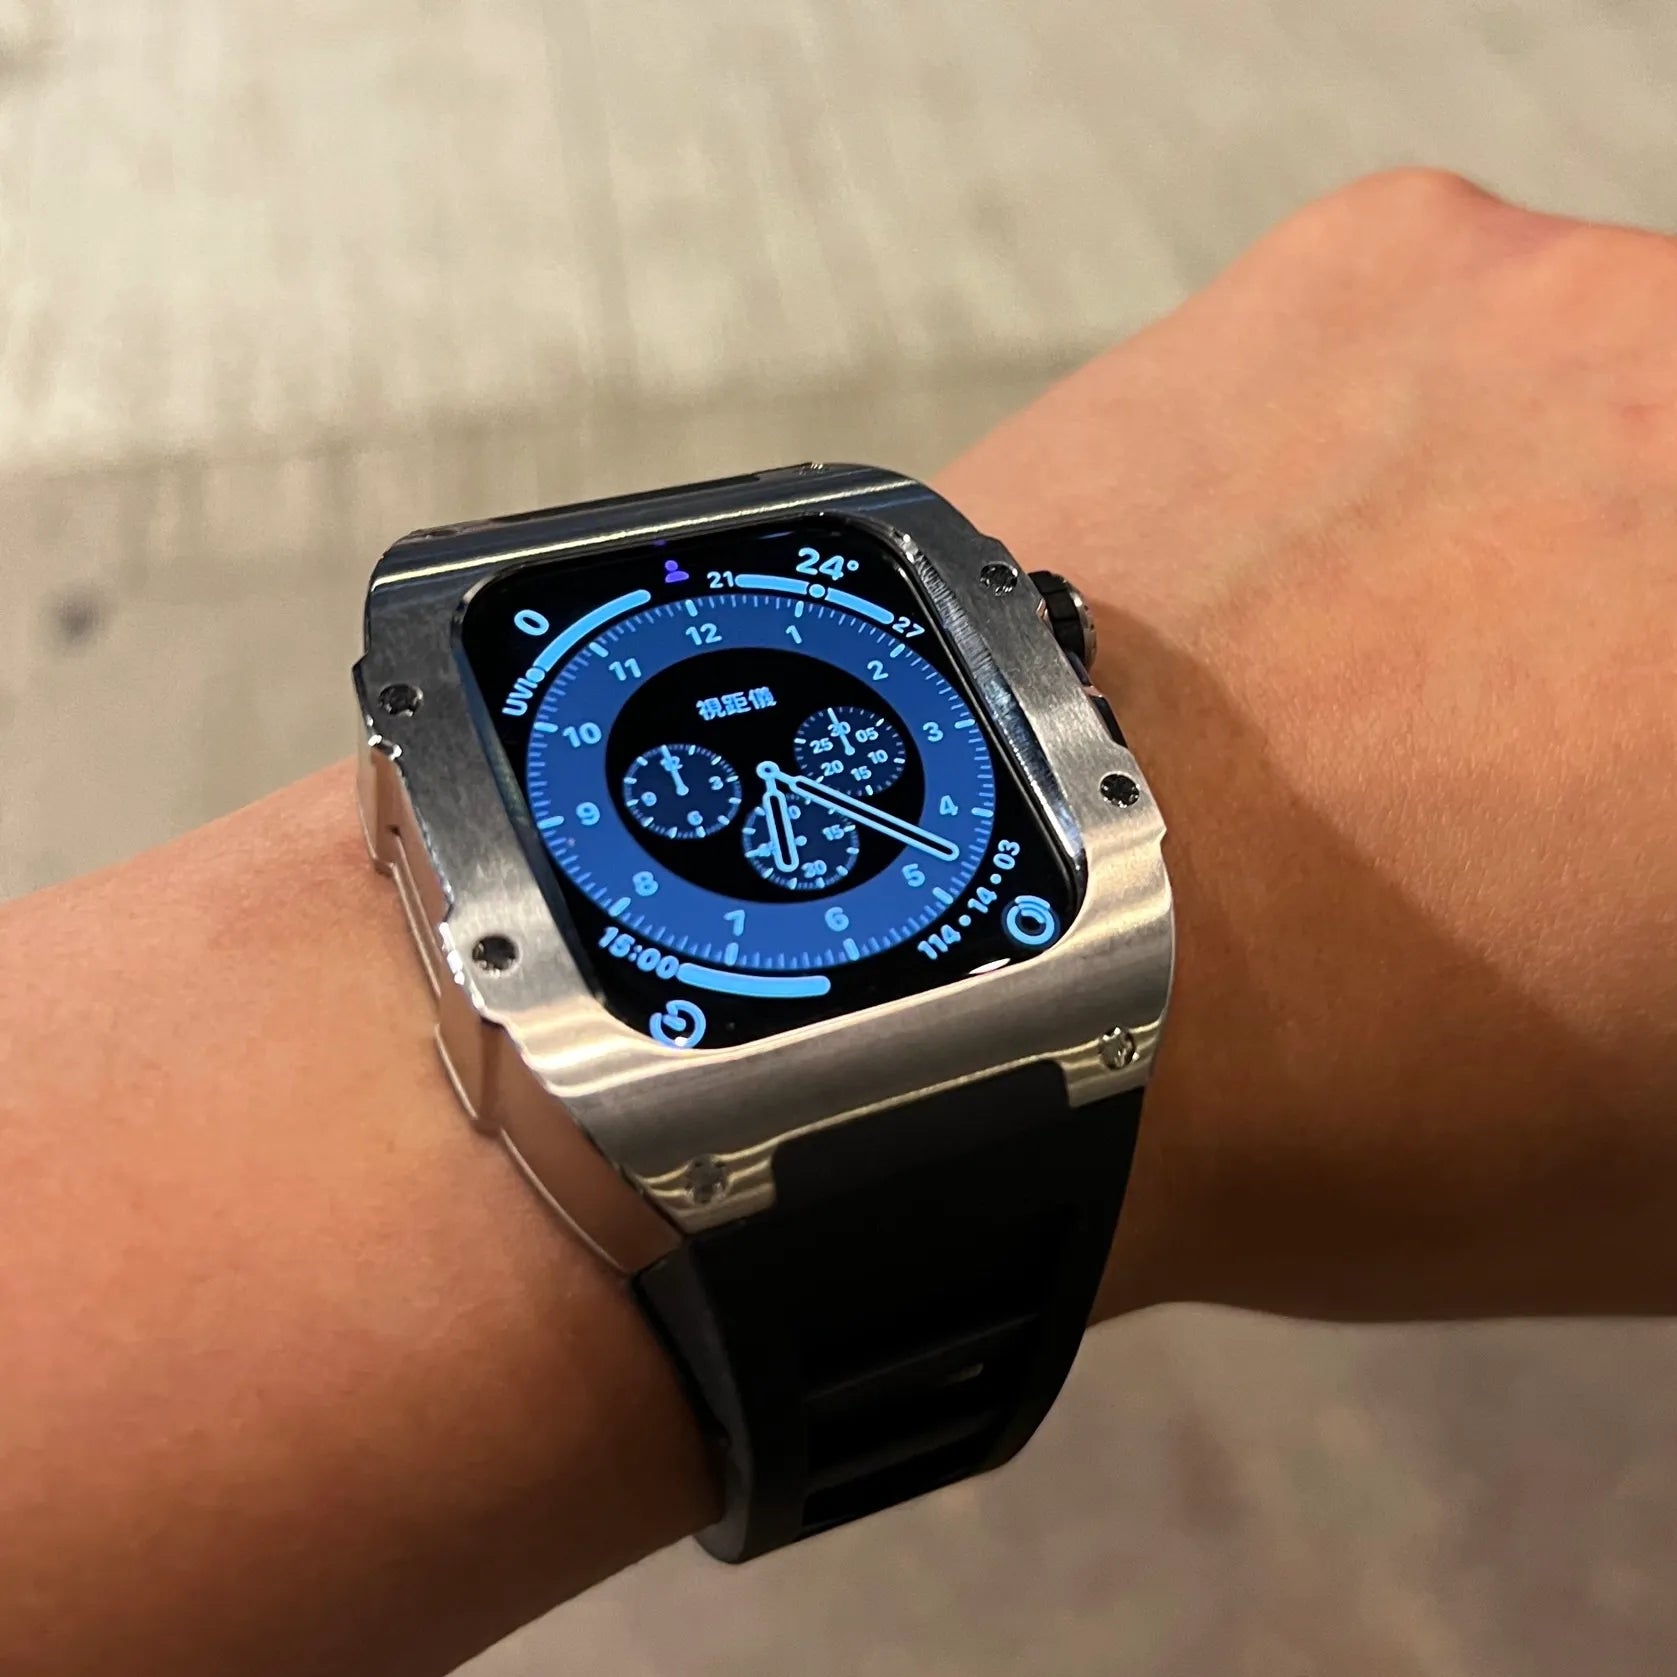 titanium Apple Watch Case retrofit kit